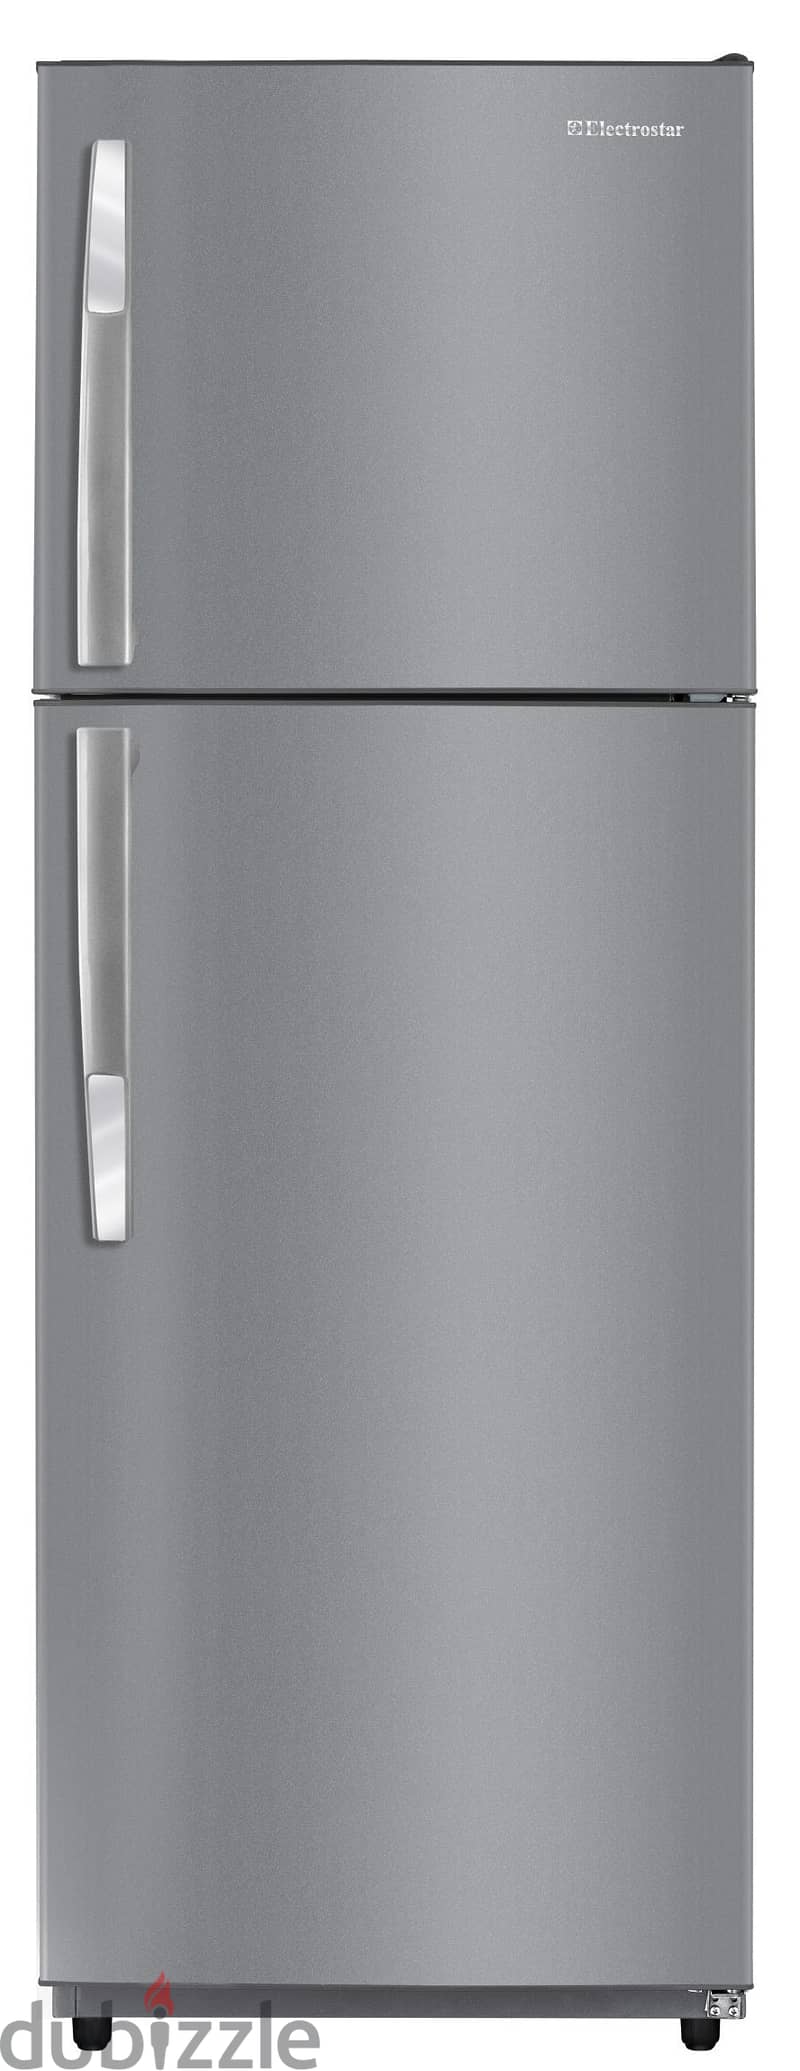 Electrostar No Frost Refrigerator, 338 Liter, Silver - LR338DMJ 0